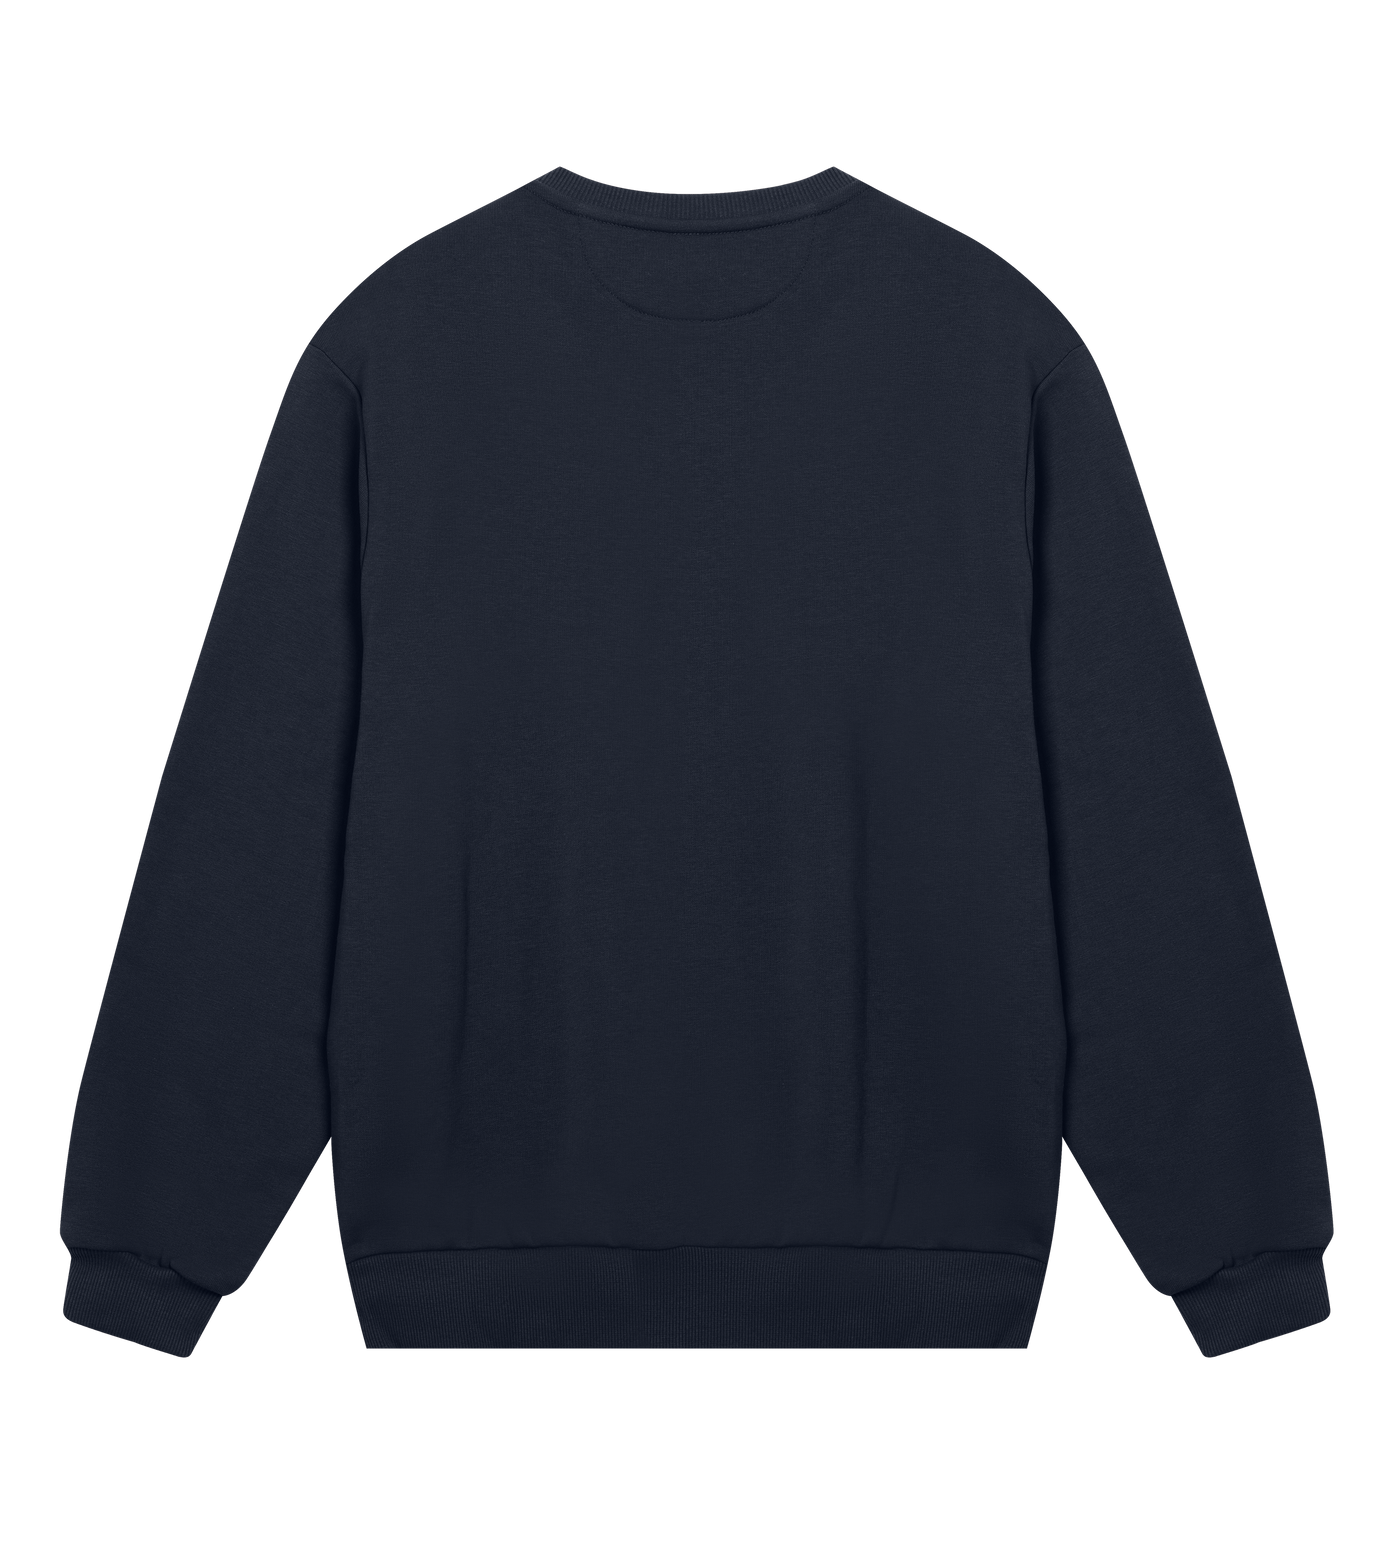 Nässjö Saints Sweatshirt - Premium sweatshirt from Creator Studio - Shop now at Reyrr Athletics